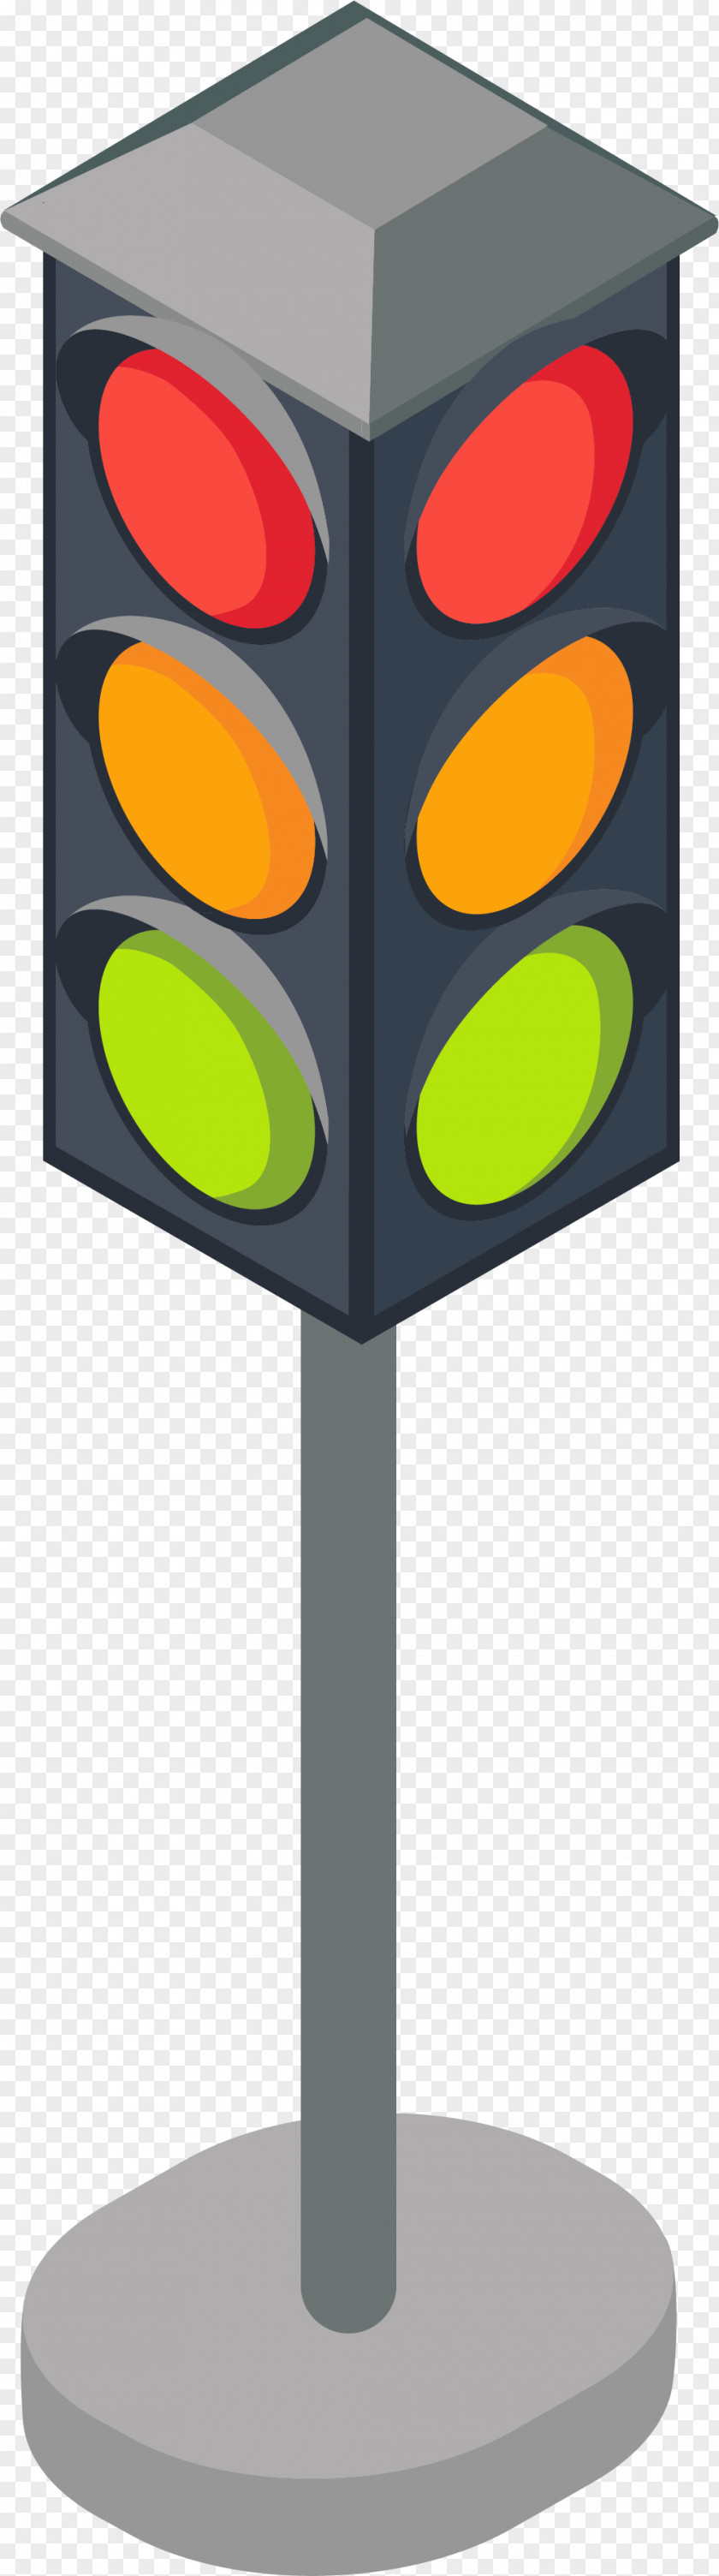 Cartoon Traffic Light Clip Art PNG